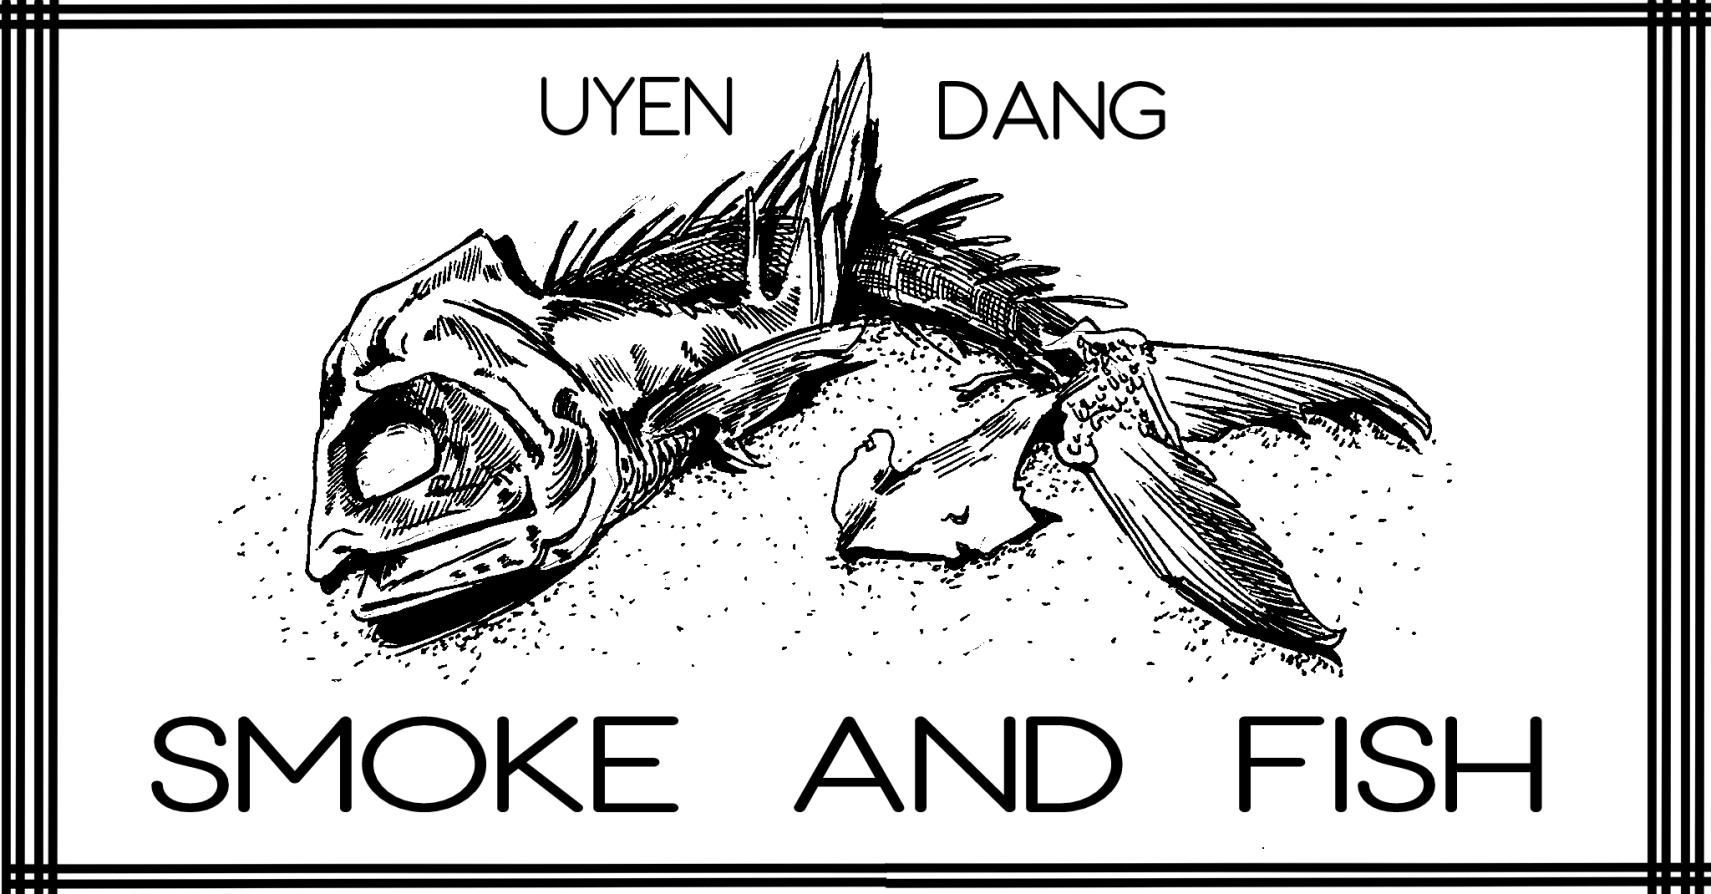 SMOKE AND FISH by Uyen P. Dang